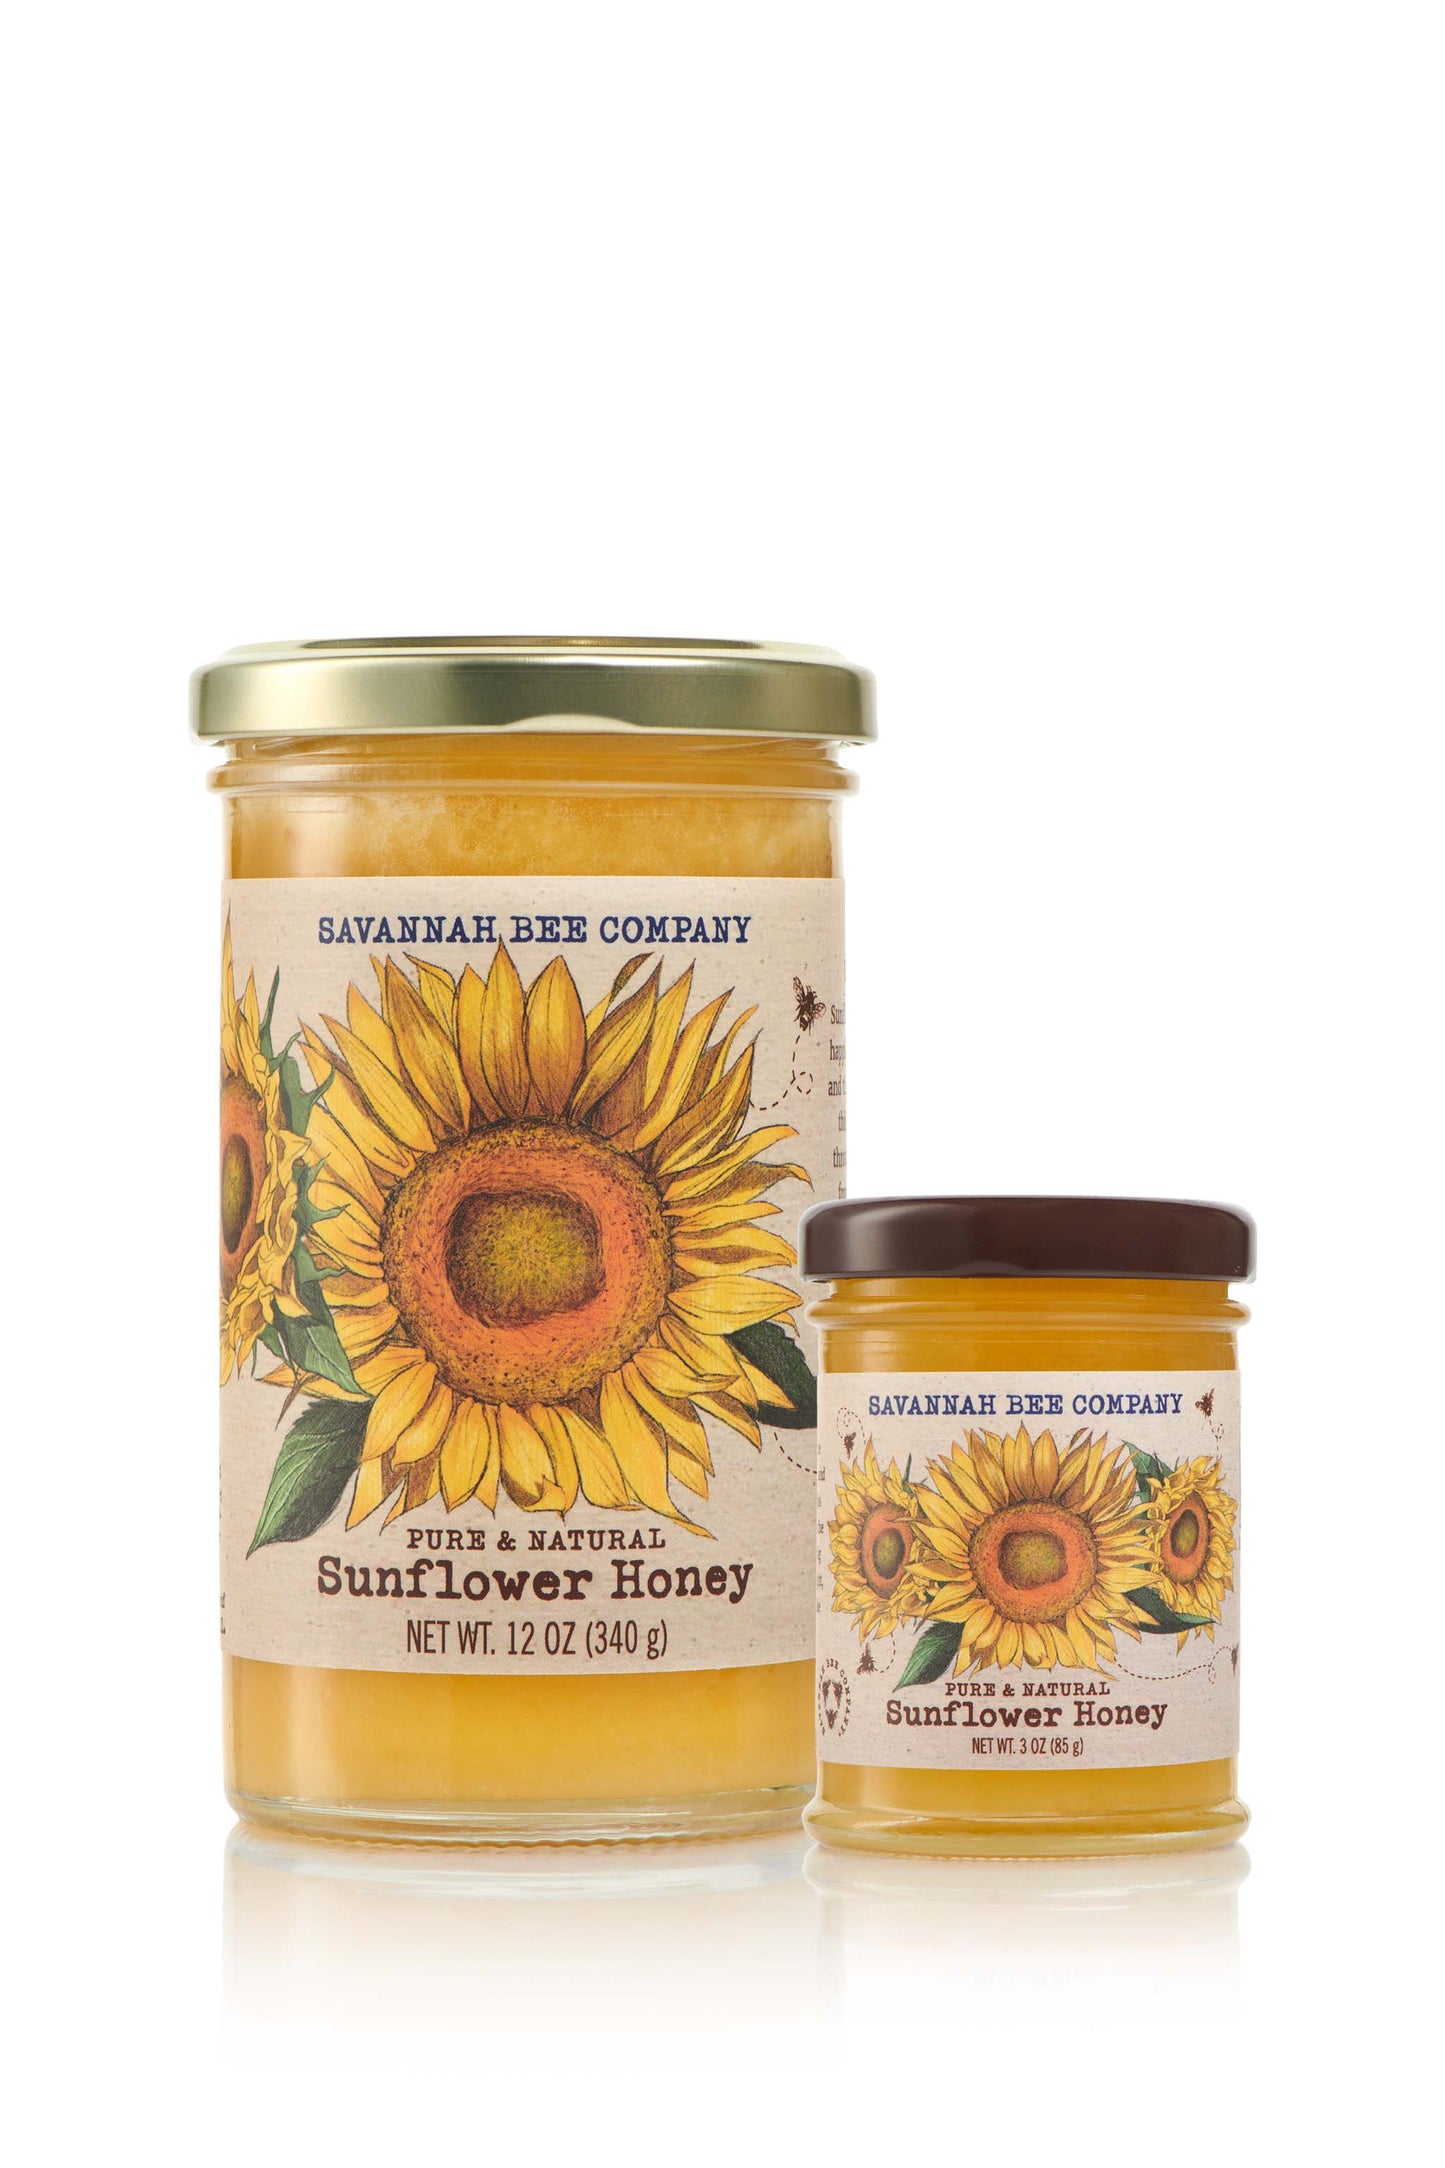 Pure & Natural Sunflower Honey 3 oz. and 12 oz. 